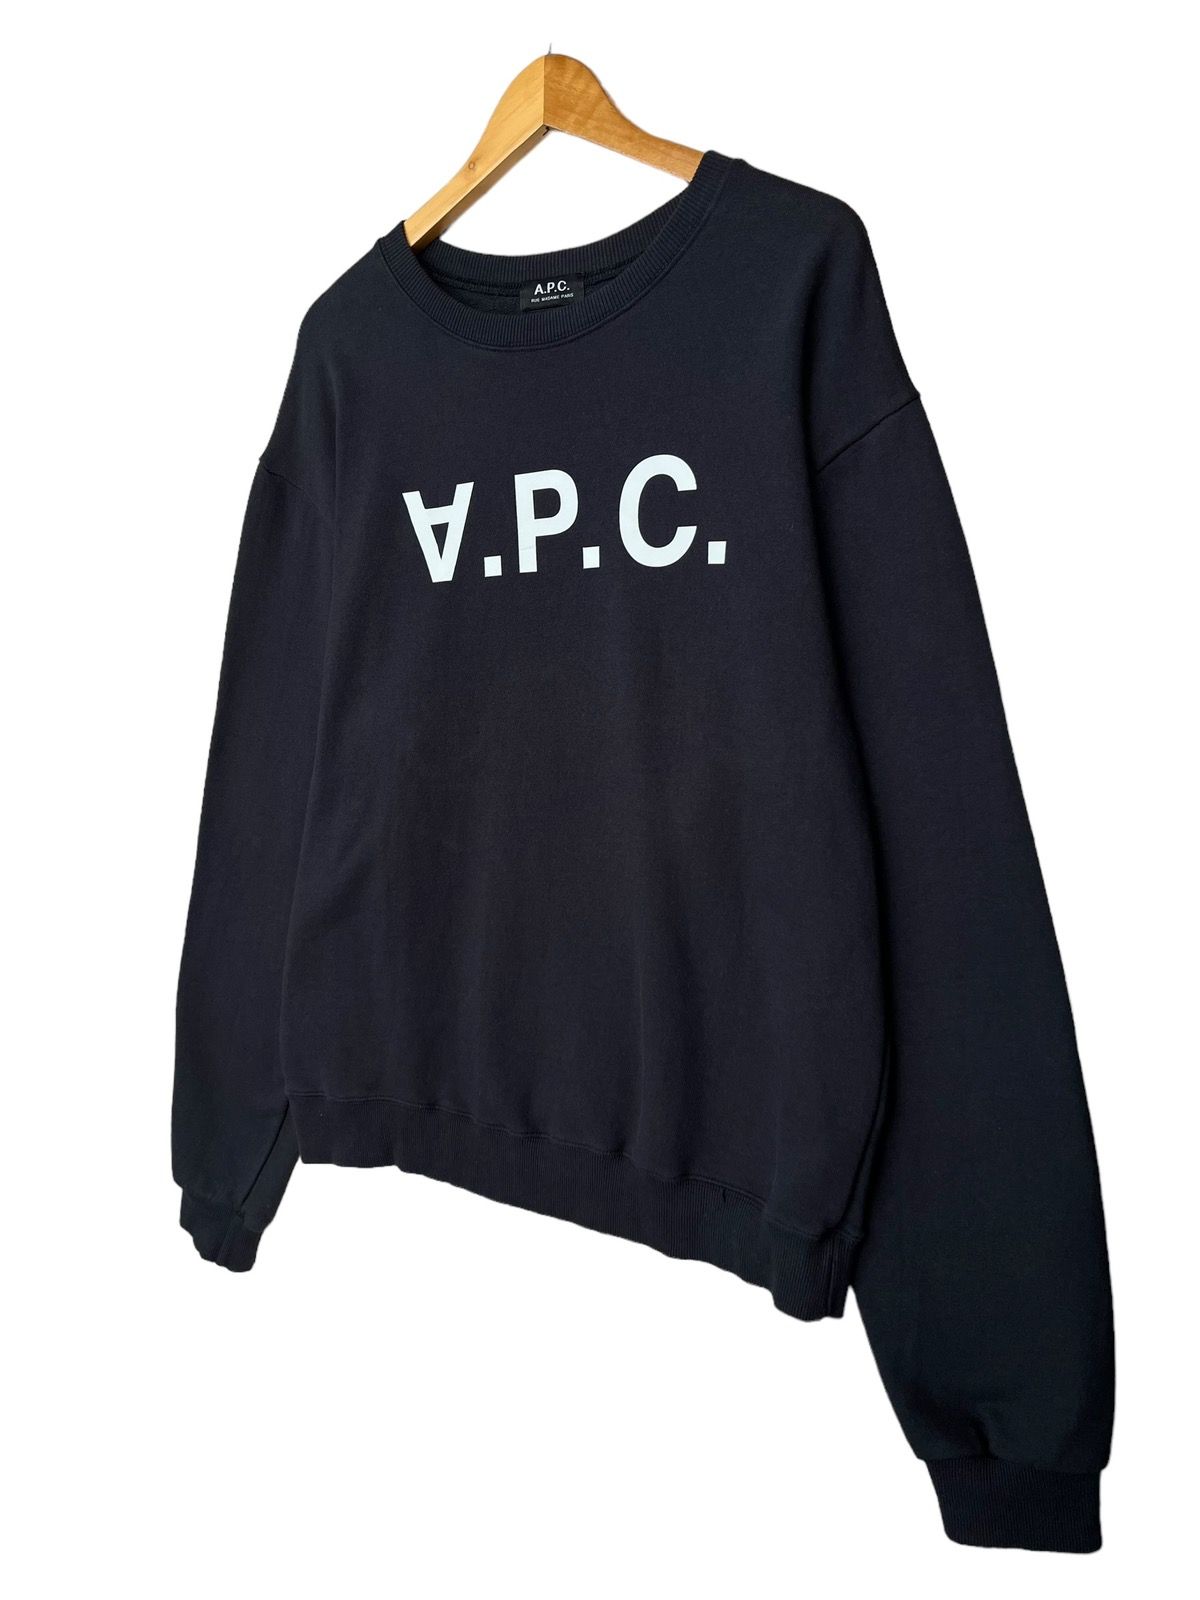 A.P.C. Paris Spellout Boxy Baggy Sweatshirt Hoodie - 3